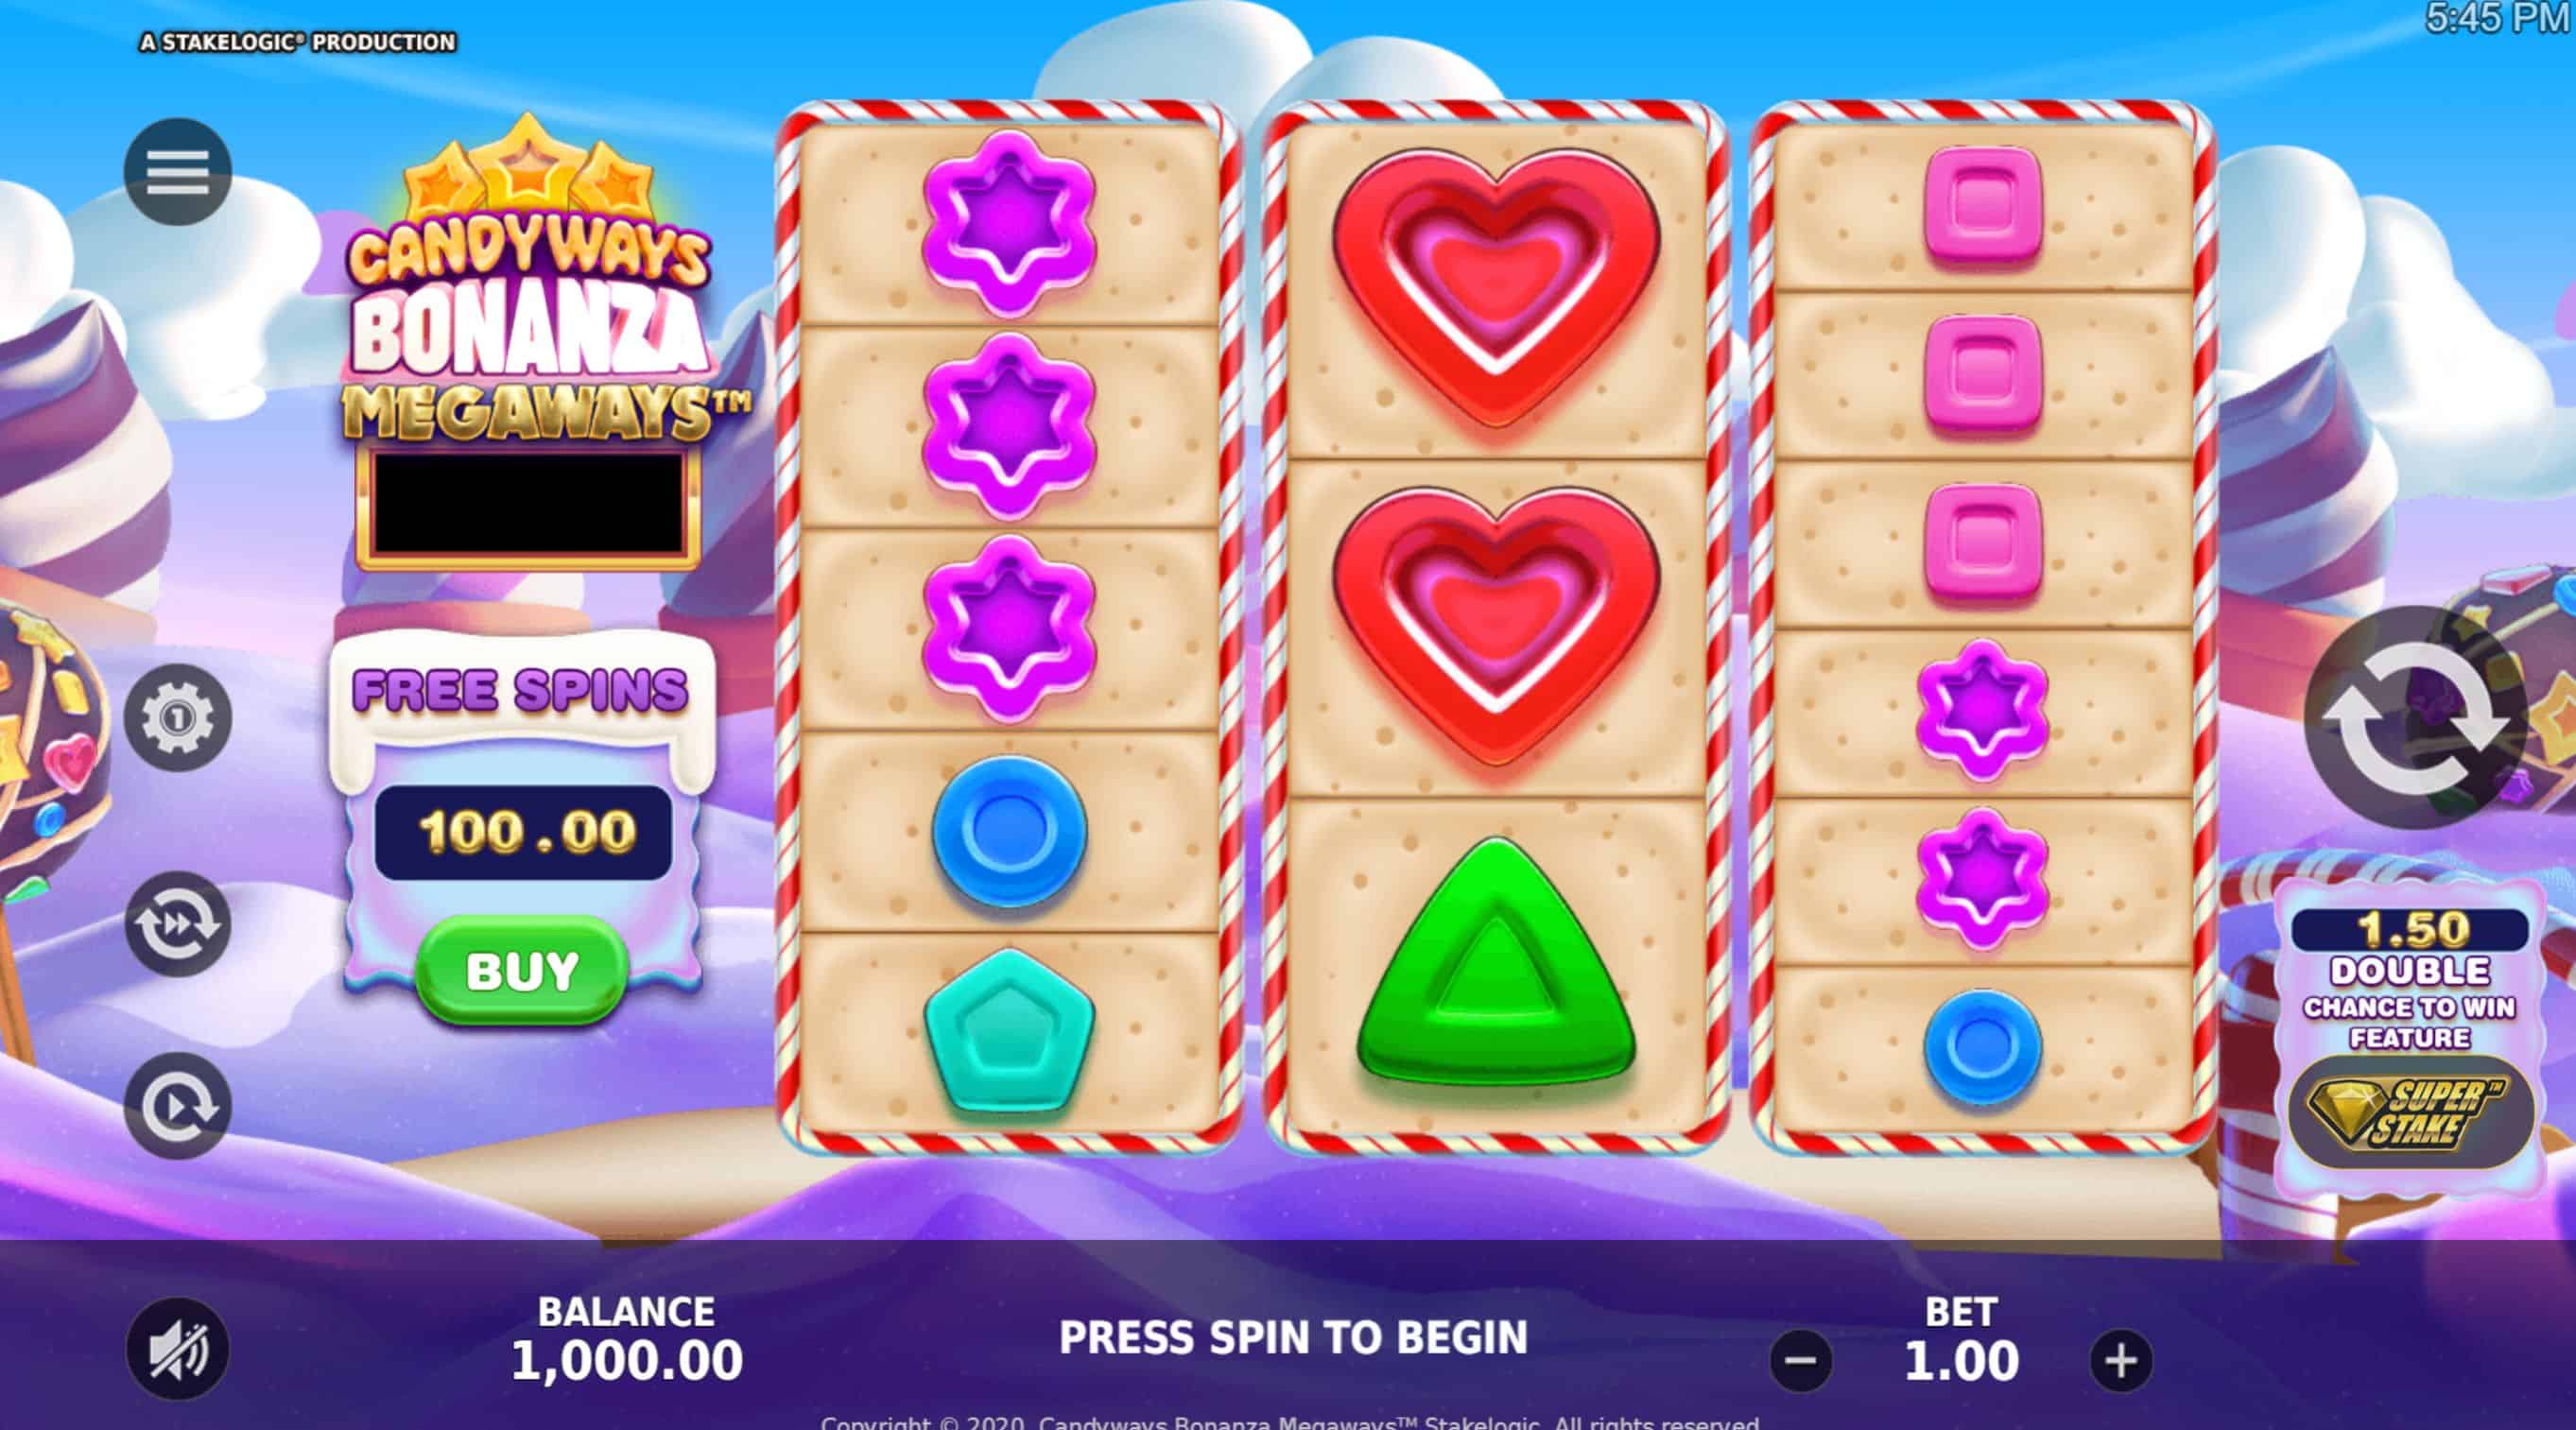 Candyways Bonanza Megaways Slot Game Free Play at Casino Ireland 01